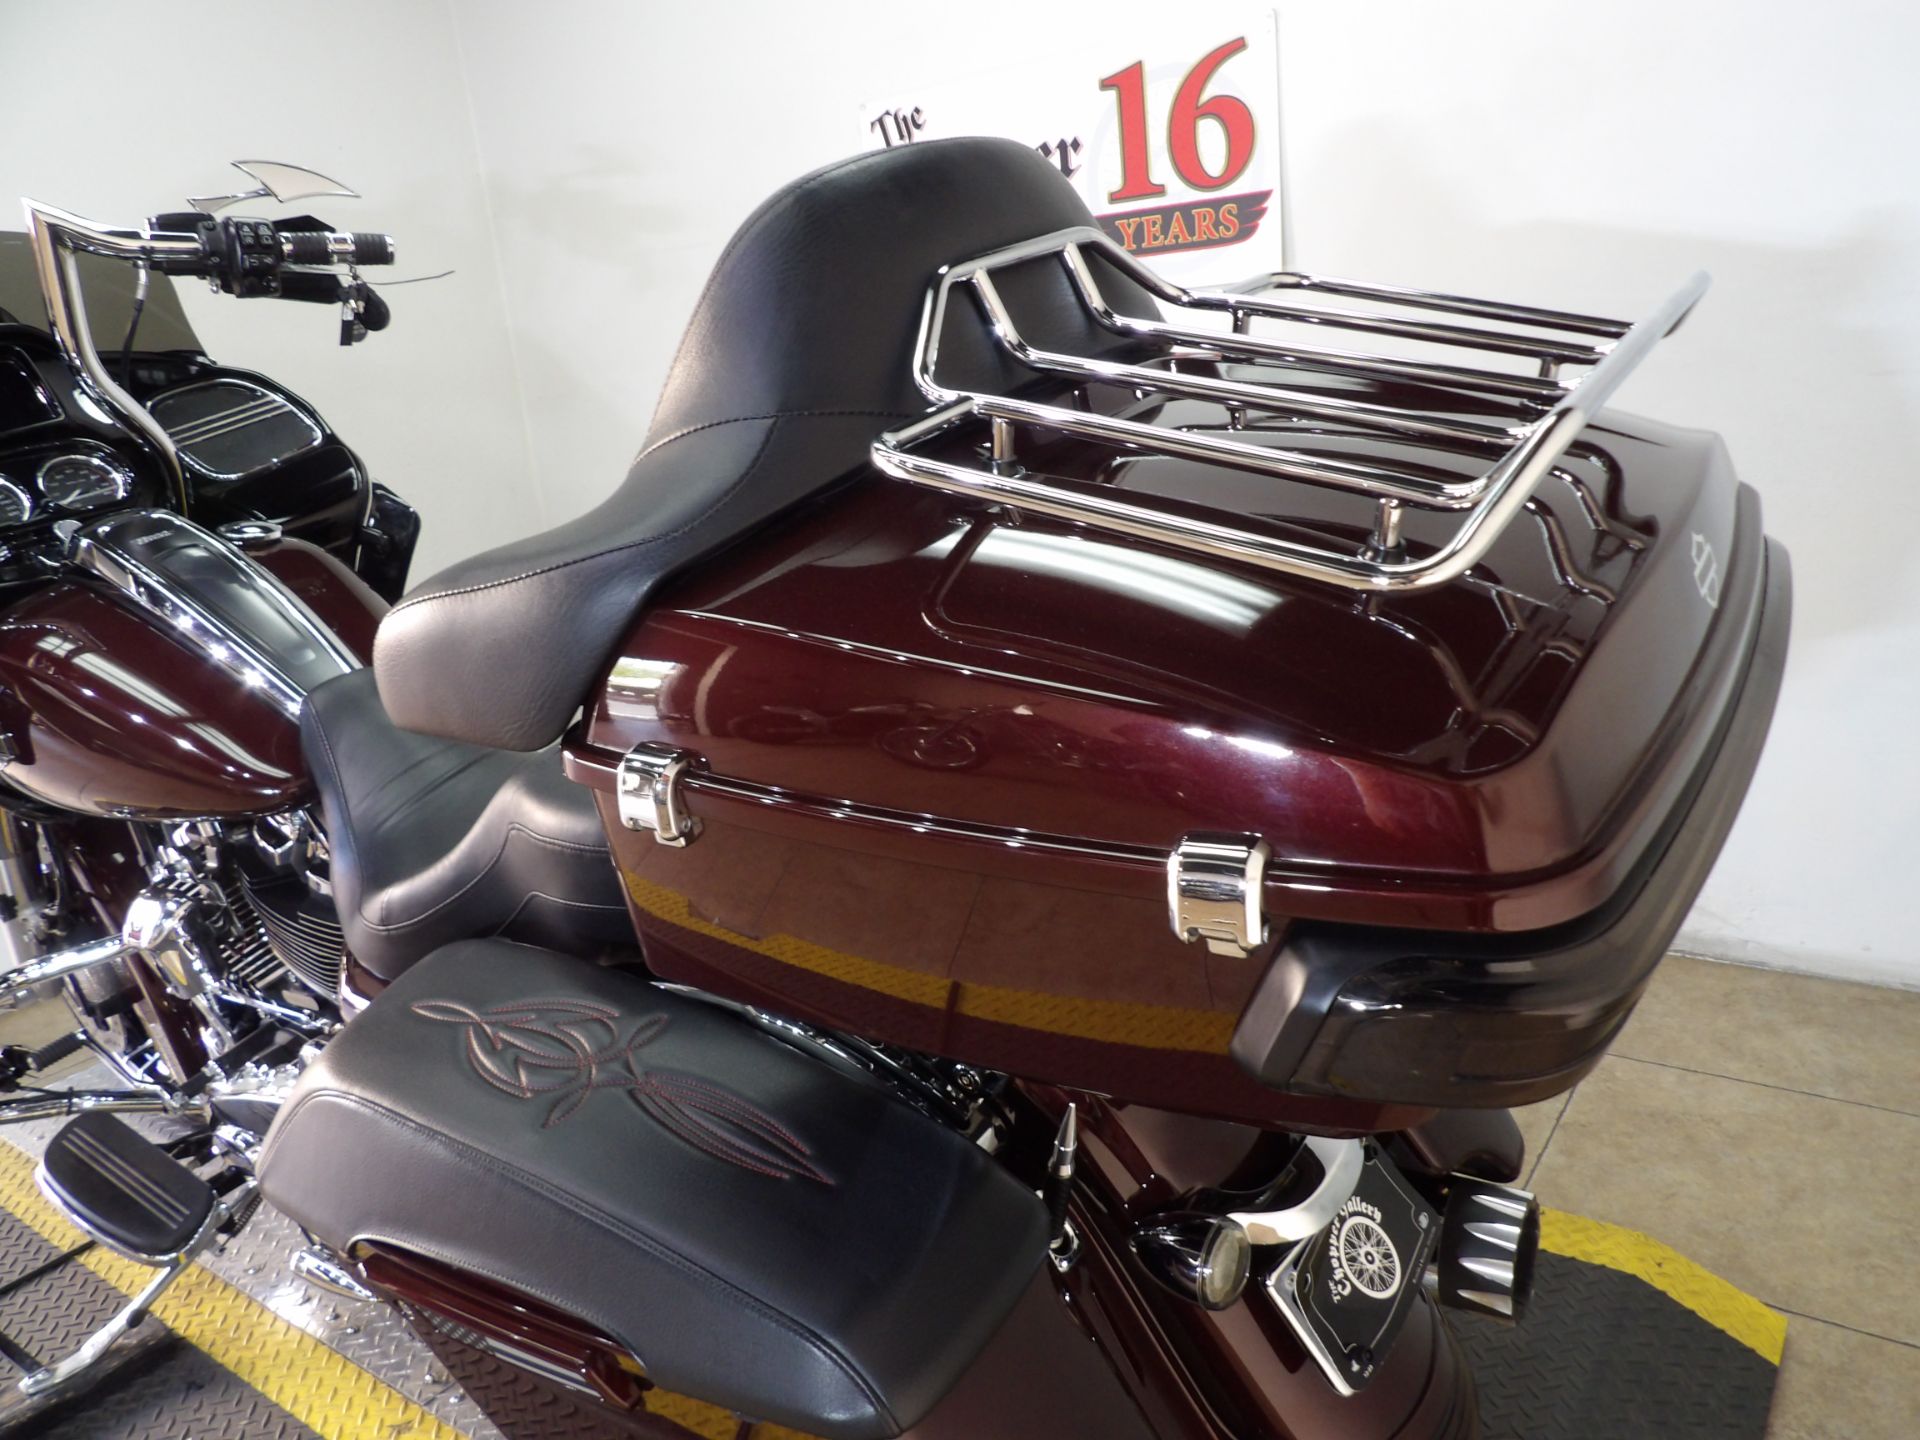 2021 Harley-Davidson Road Glide® Special in Temecula, California - Photo 34